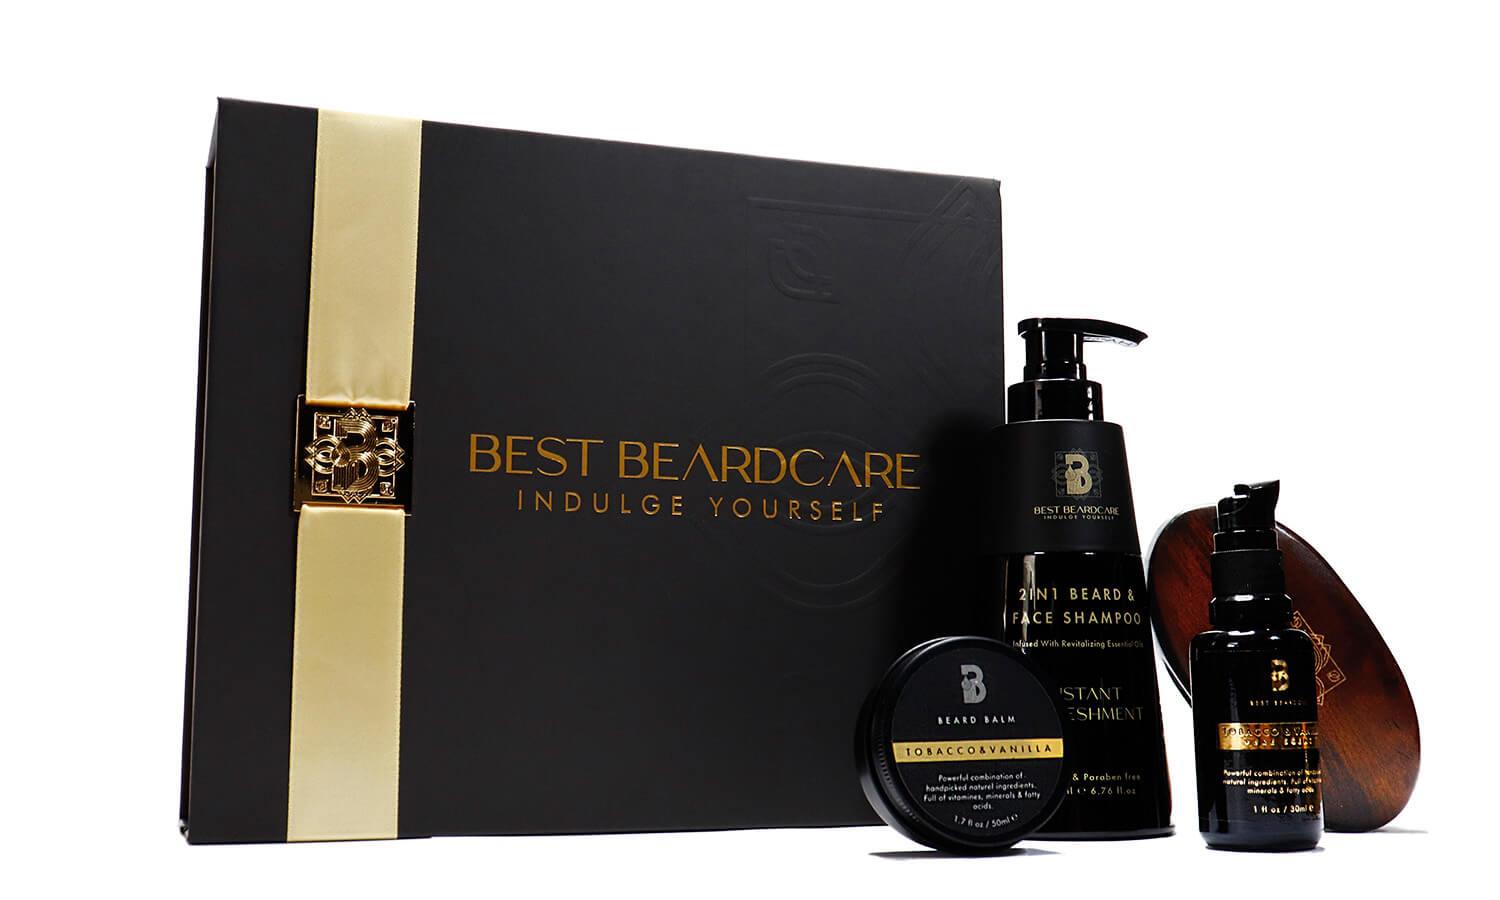 Best Beardcare Tobacco & Vanilla Gift Set Beard Grooming Kit With Beard Wax